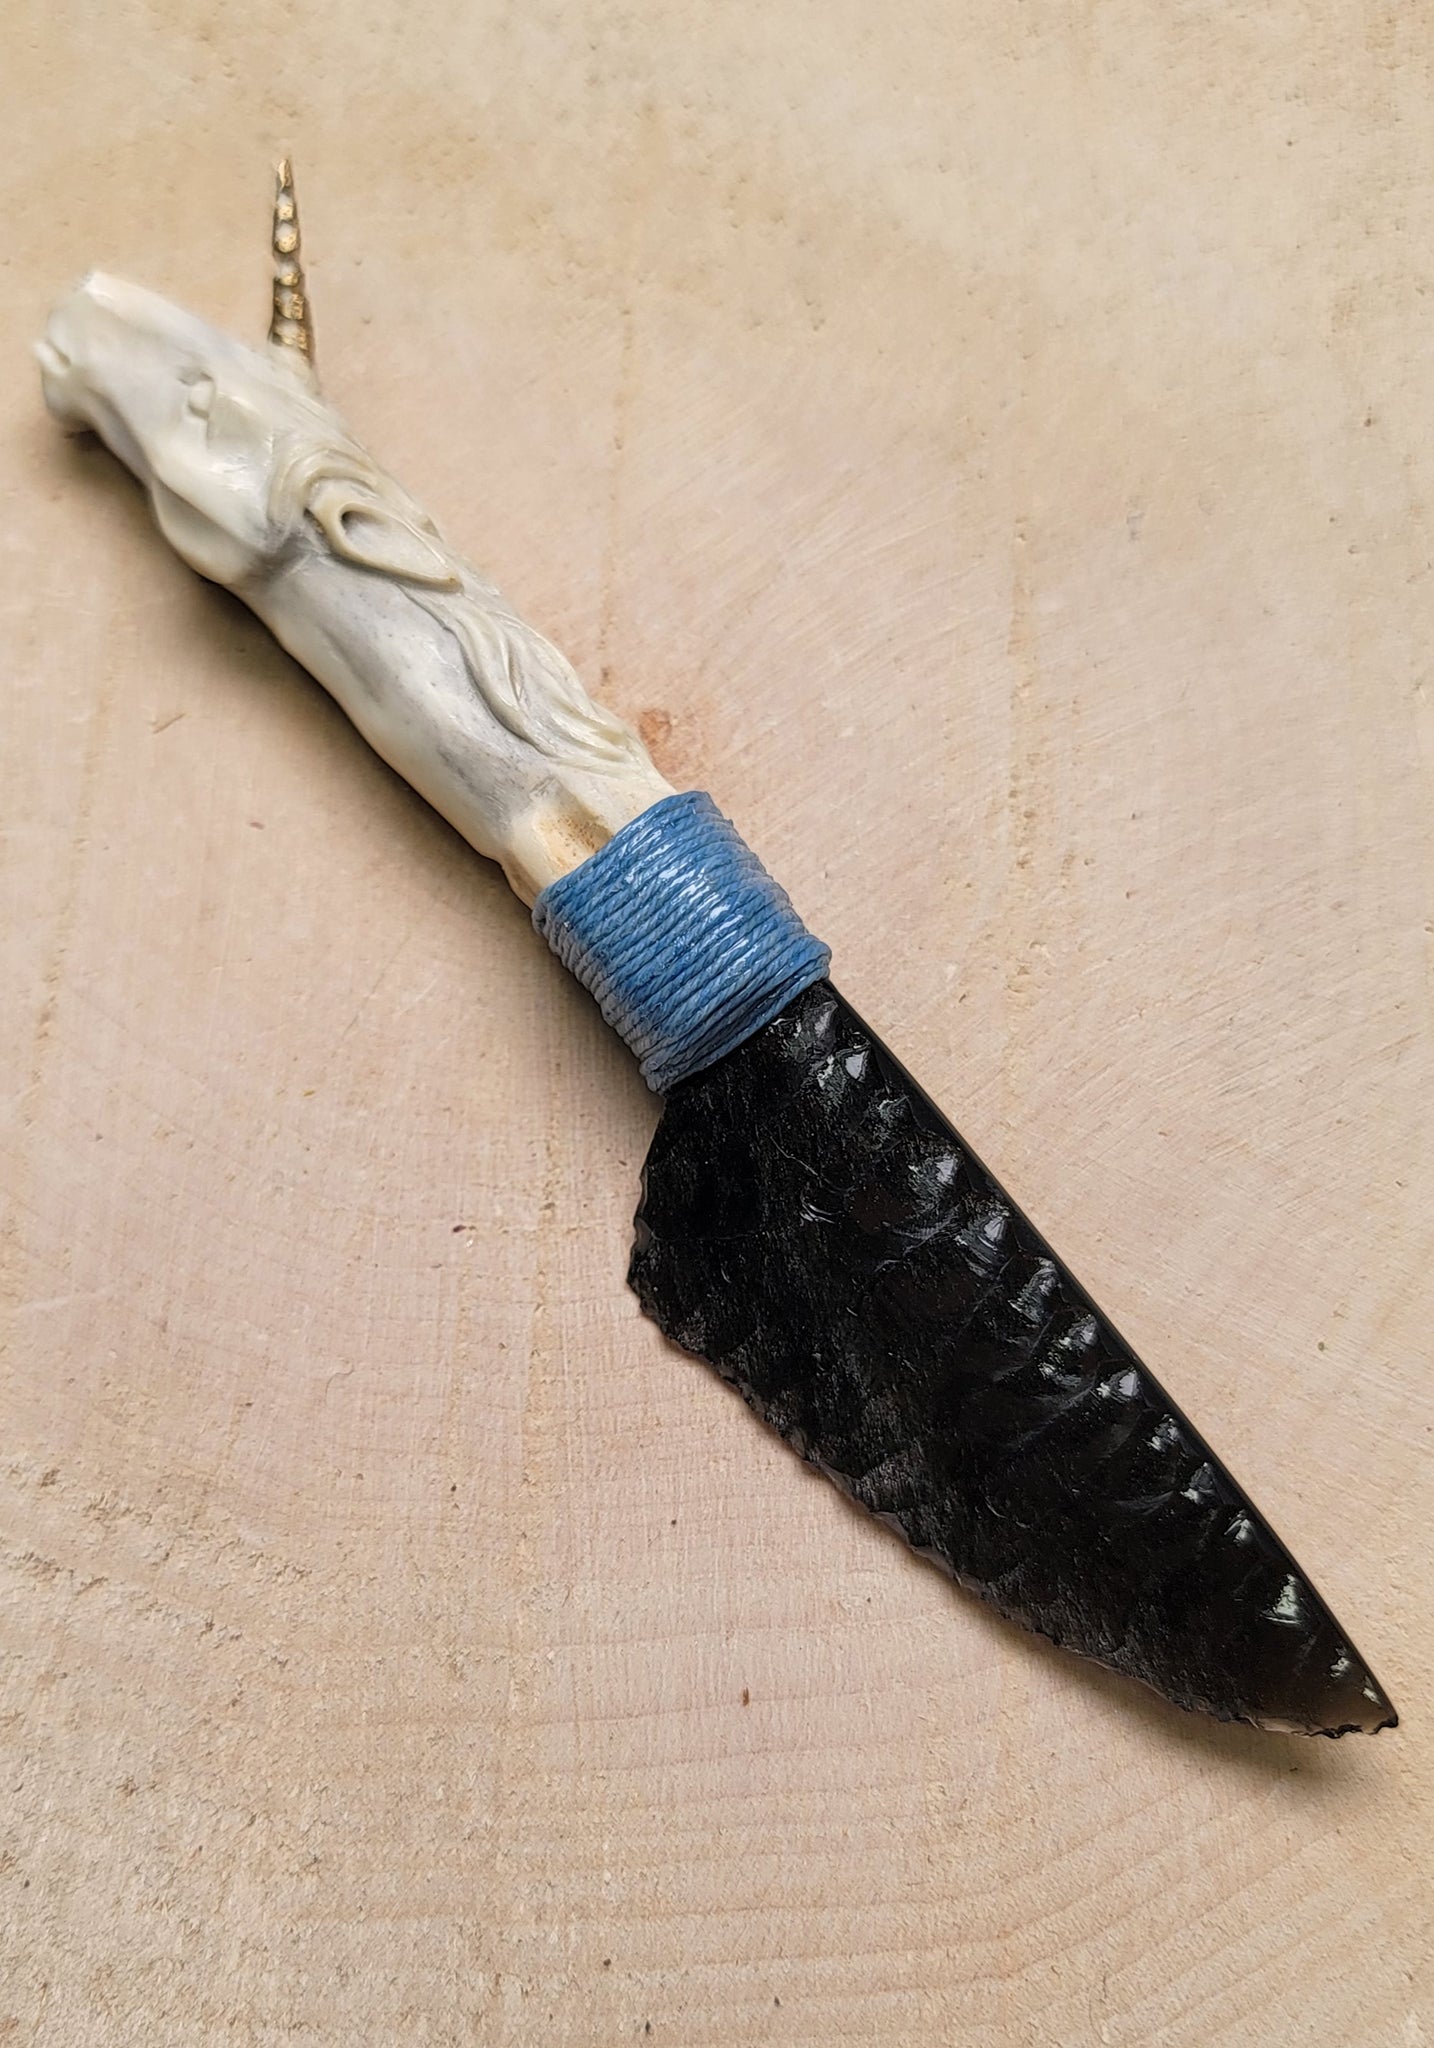 Silver Sheen Obsidian Polished Gemstone Blade Knife With Unicorn Carved Antler Handle - Unique!